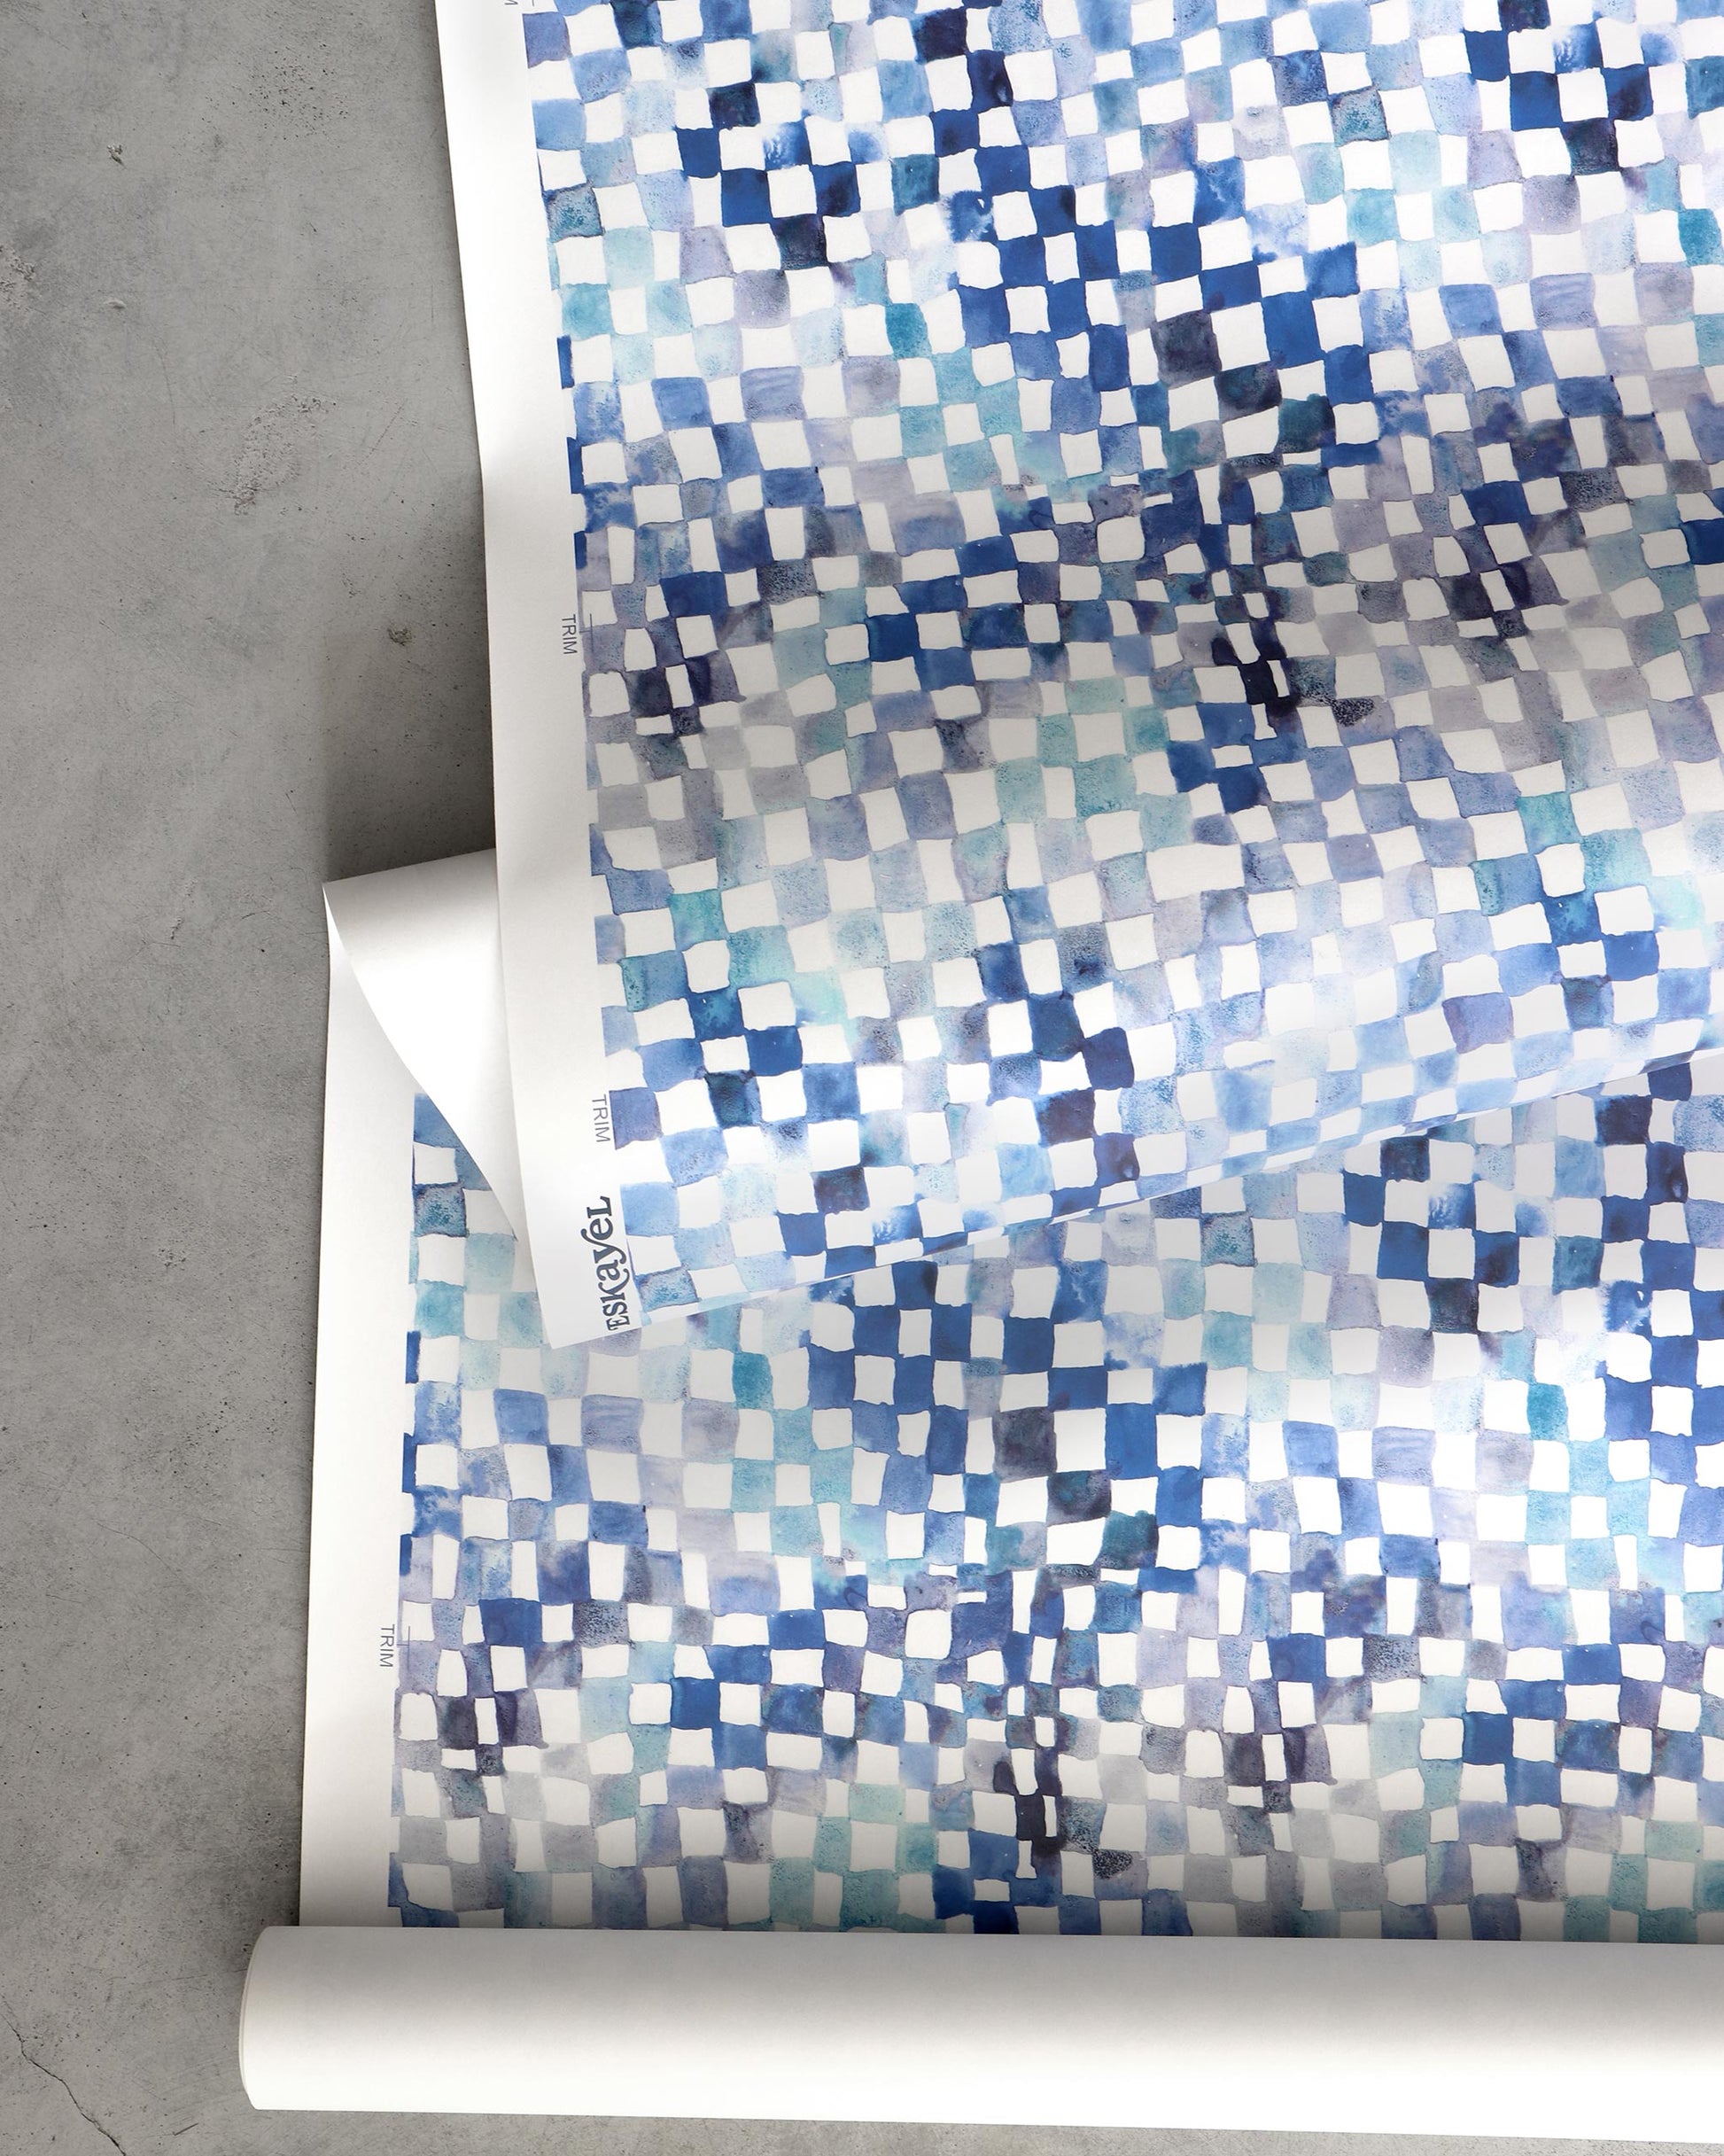 A Chess Wallwallpaper Ocean checkered pattern on a roll of wallpaper